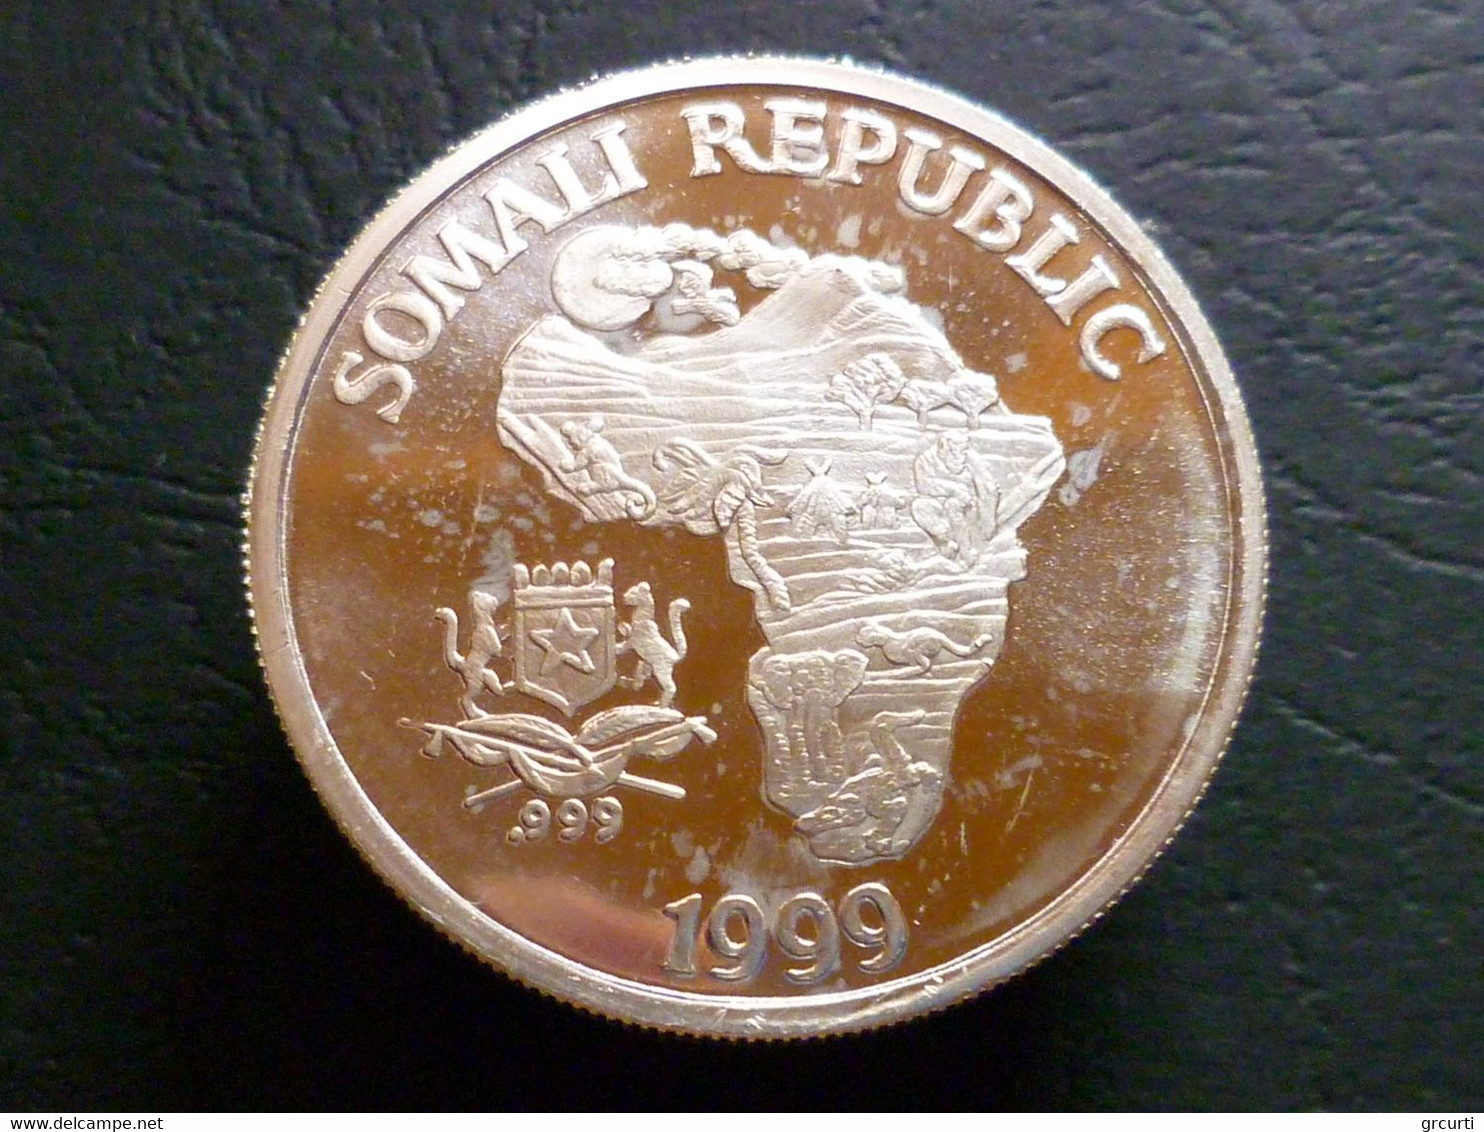 Somalia 10$ 1999 - The African Monkey - UC# 290 - Somalia